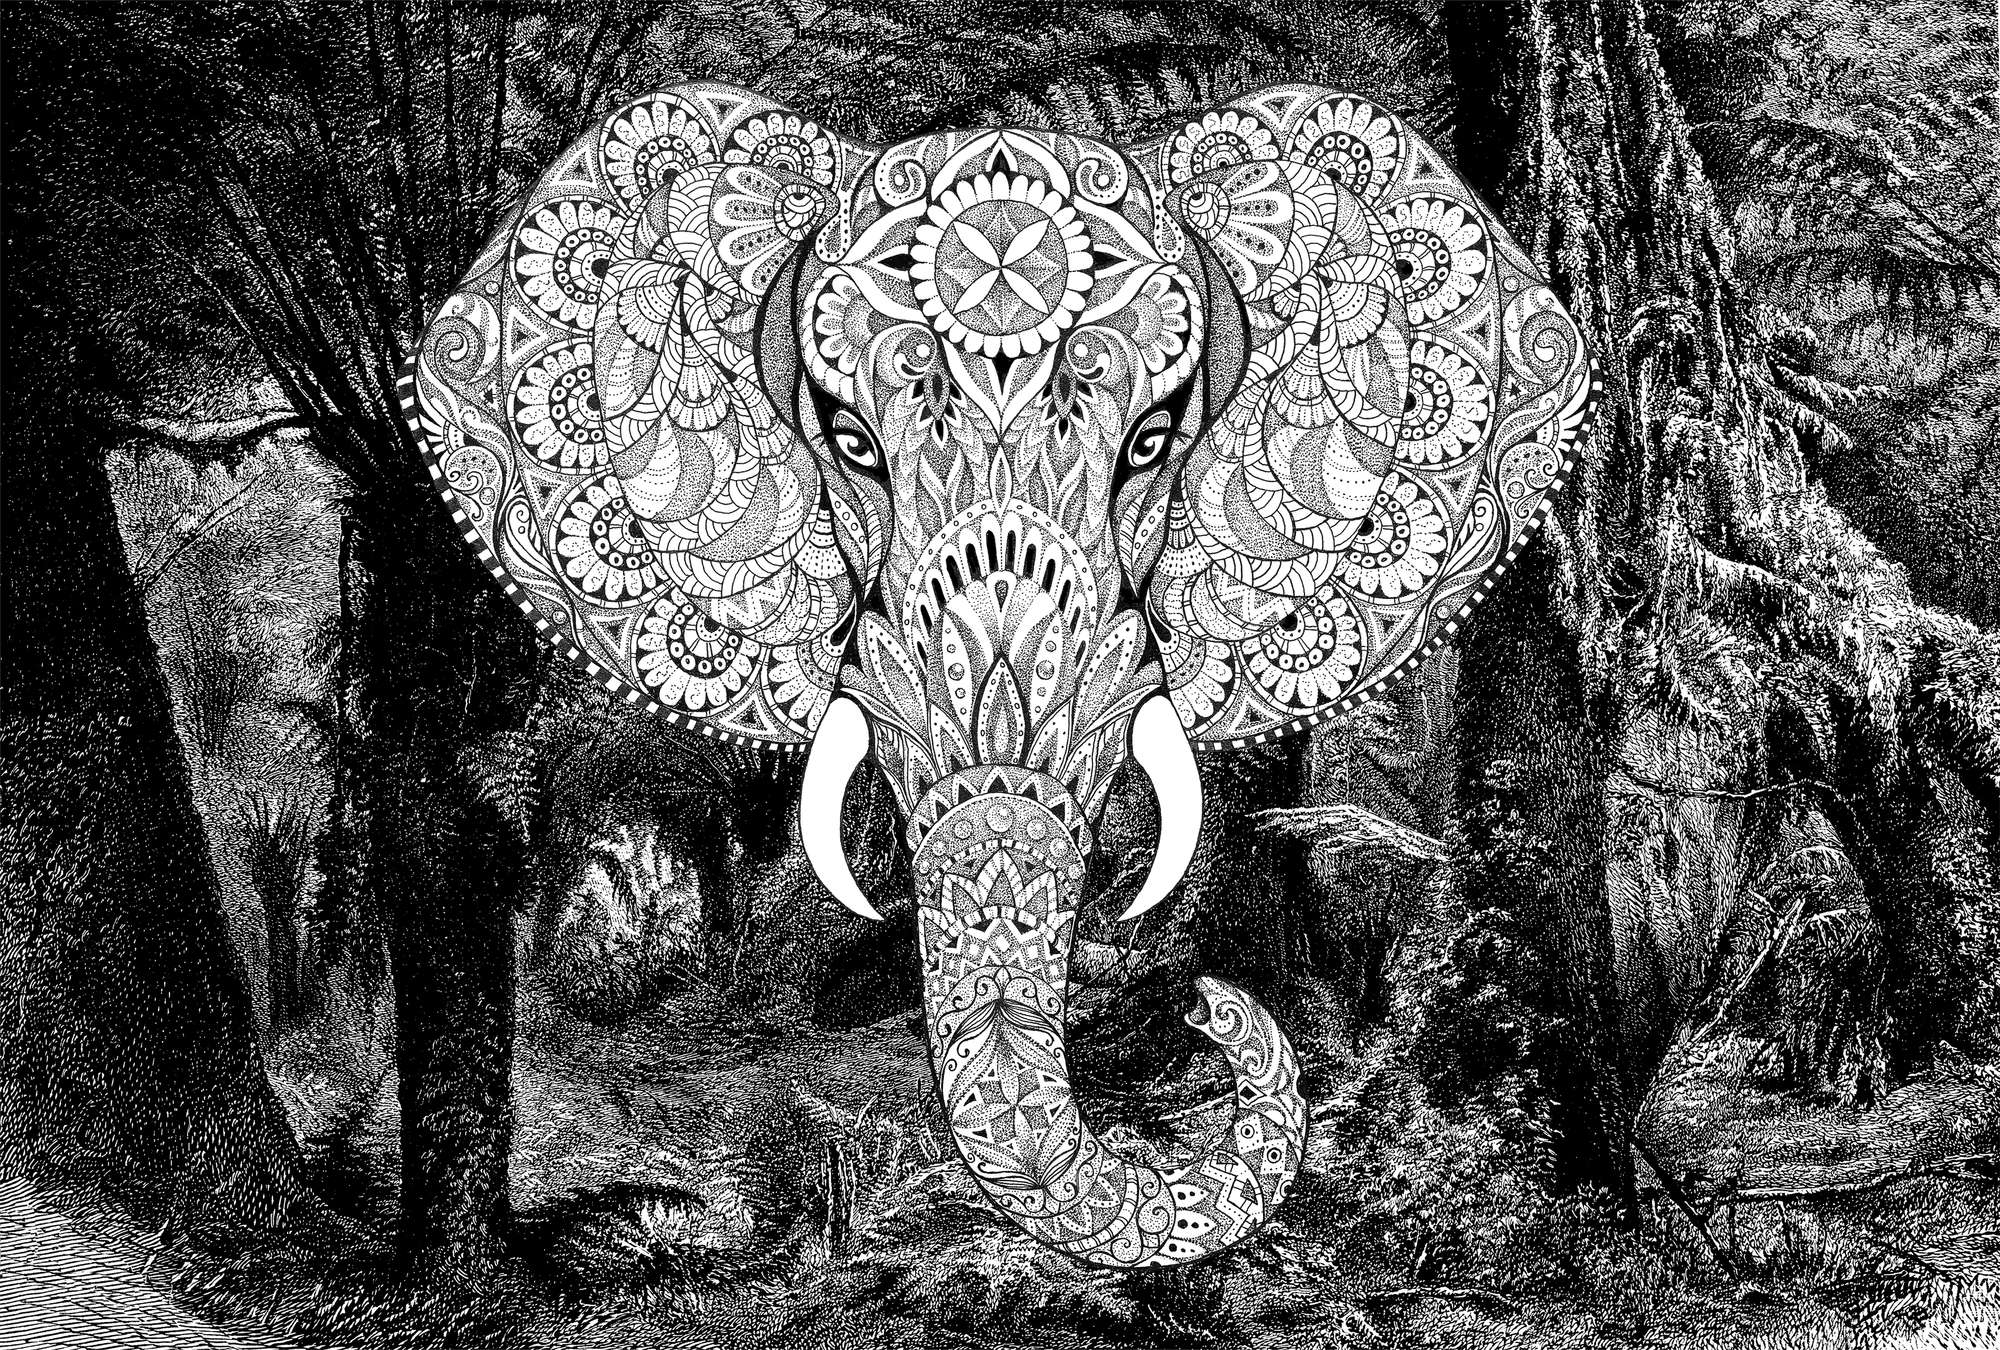             Photo wallpaper elephant boho style with jungle motif - grey, white, black
        